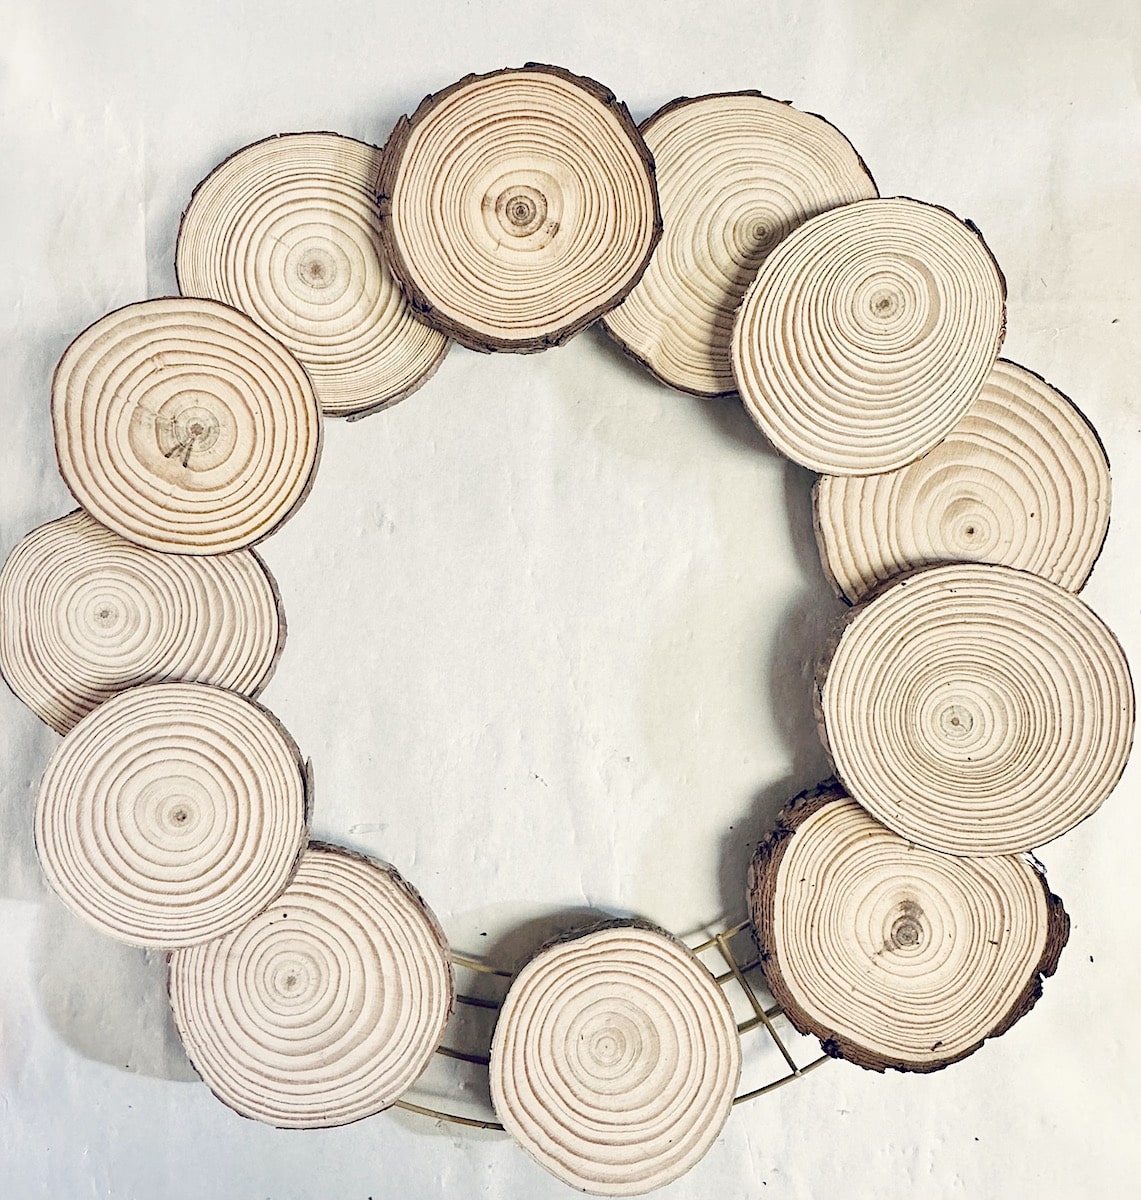 Wood Slice Wreath Step 1 on a white background